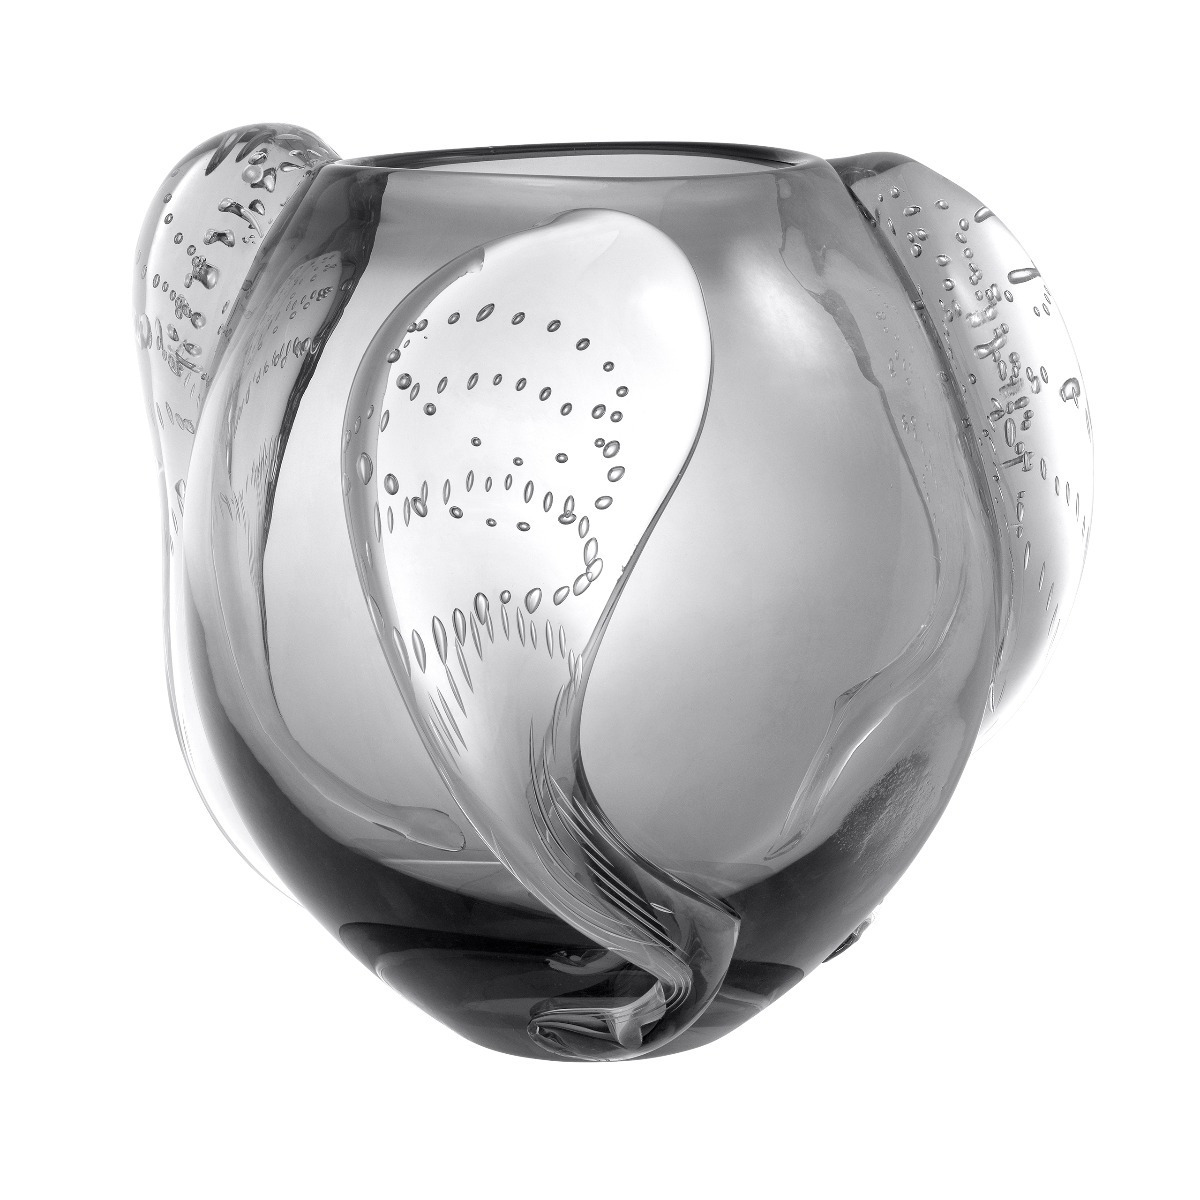 Eichholtz Sianluca Vase L Grey, Silver Glass - Barker & Stonehouse - image 1